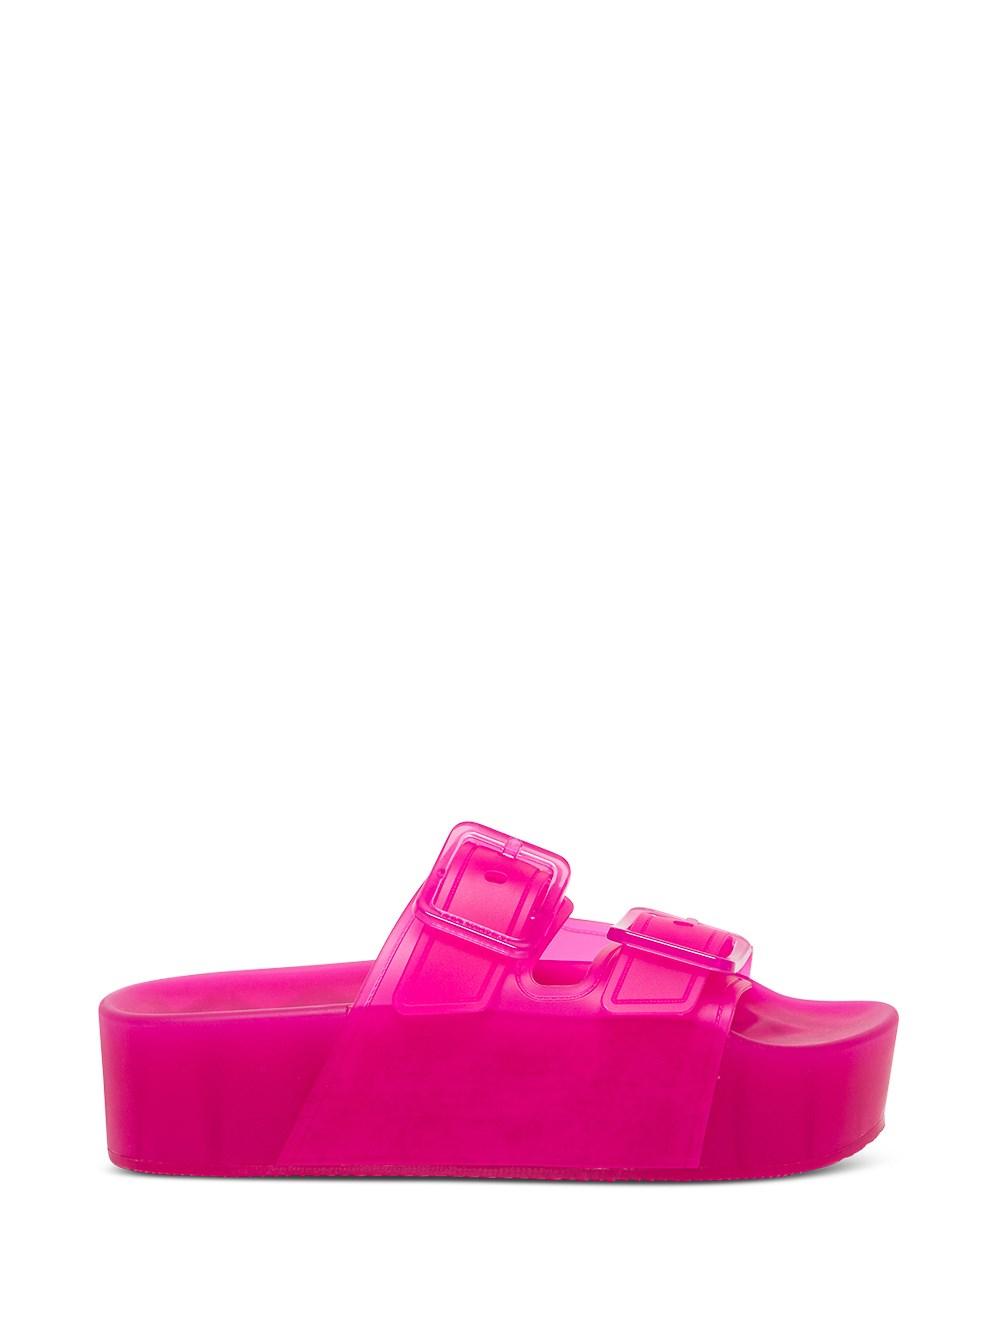 Balenciaga Mallorca Pink Rubber Sandals With Platform | Lyst